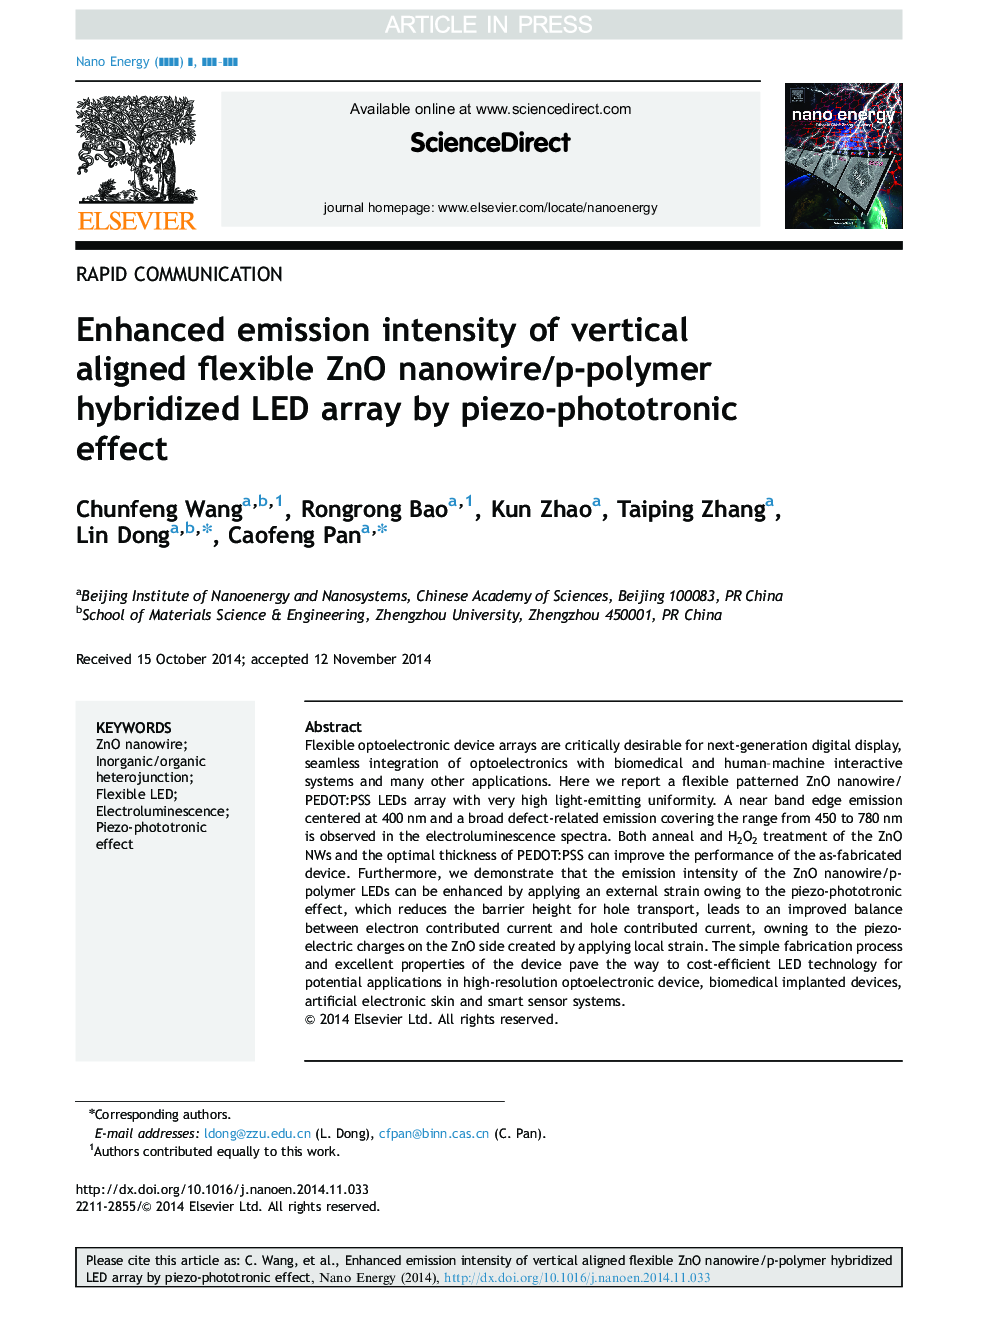 Enhanced emission intensity of vertical aligned flexible ZnO nanowire/p-polymer hybridized LED array by piezo-phototronic effect